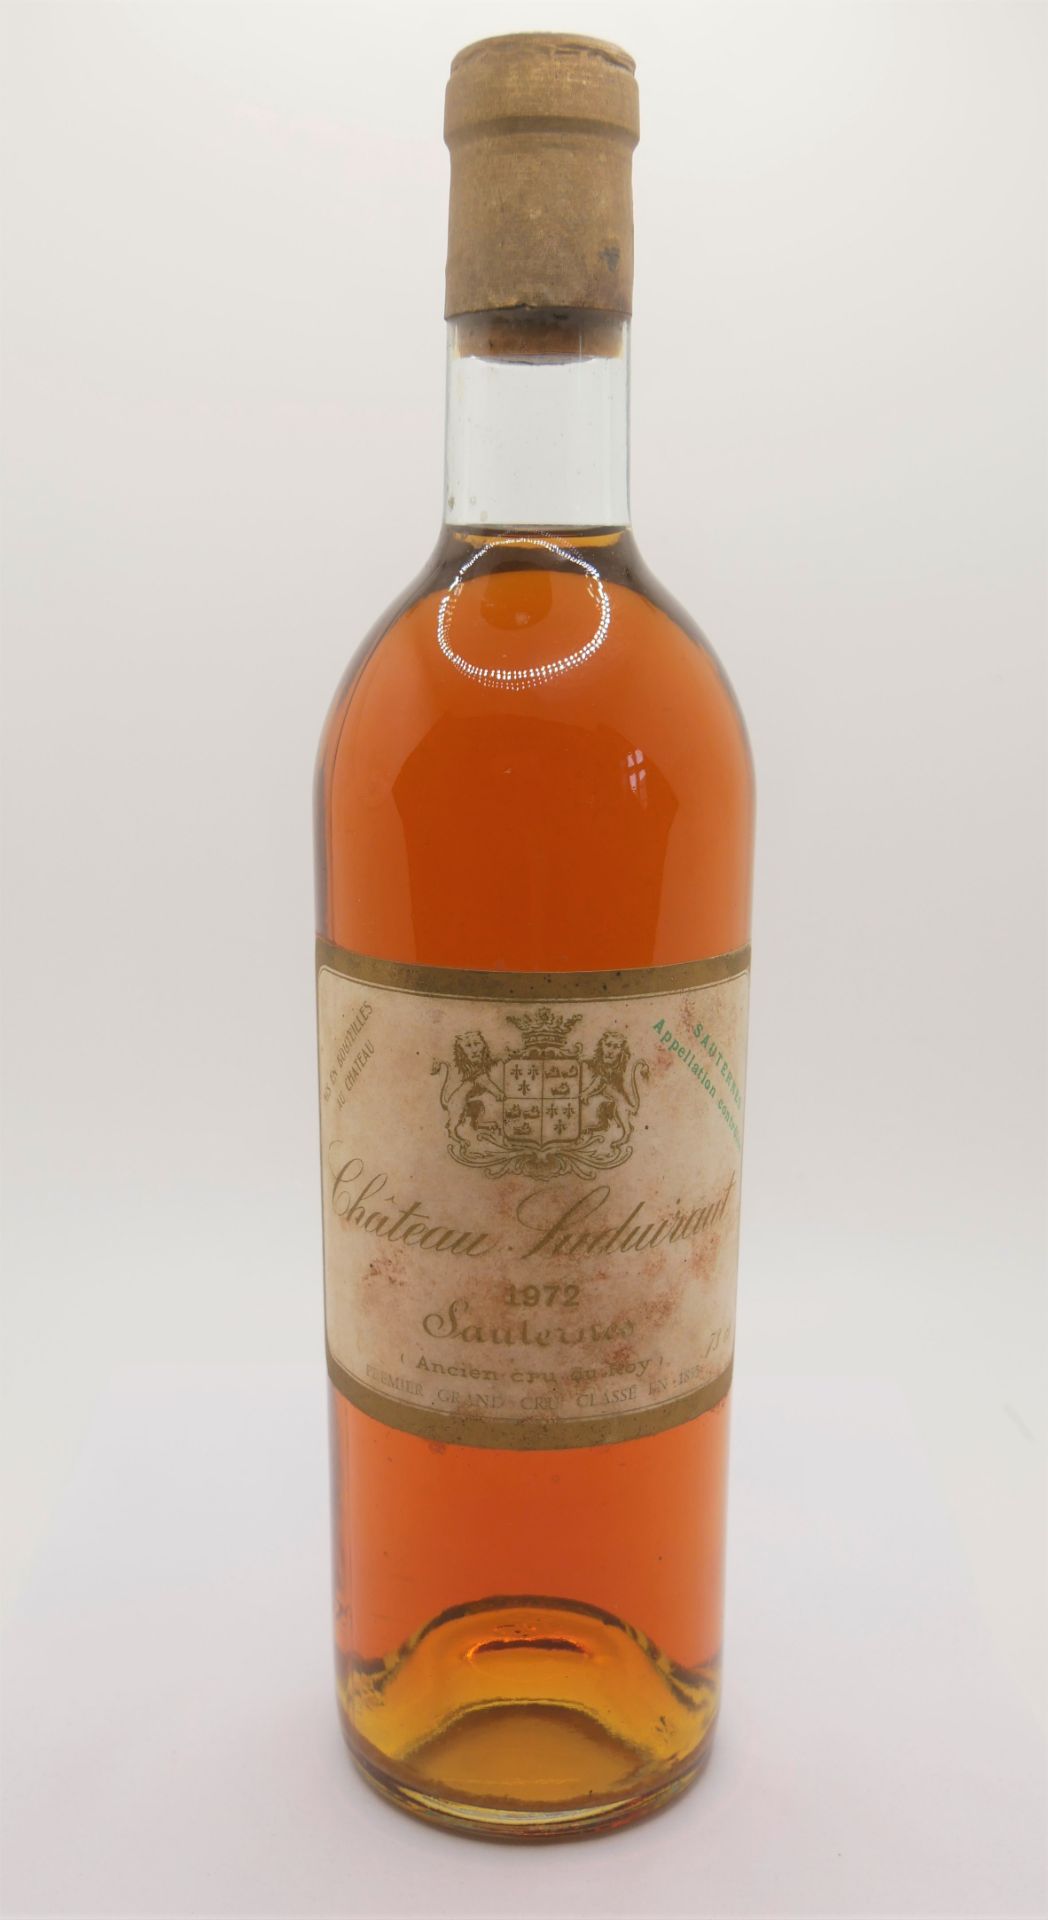 Chateau Suduiraut 1972, Sauleines Ancien cru du Roy, 0,75 l Dessertwein